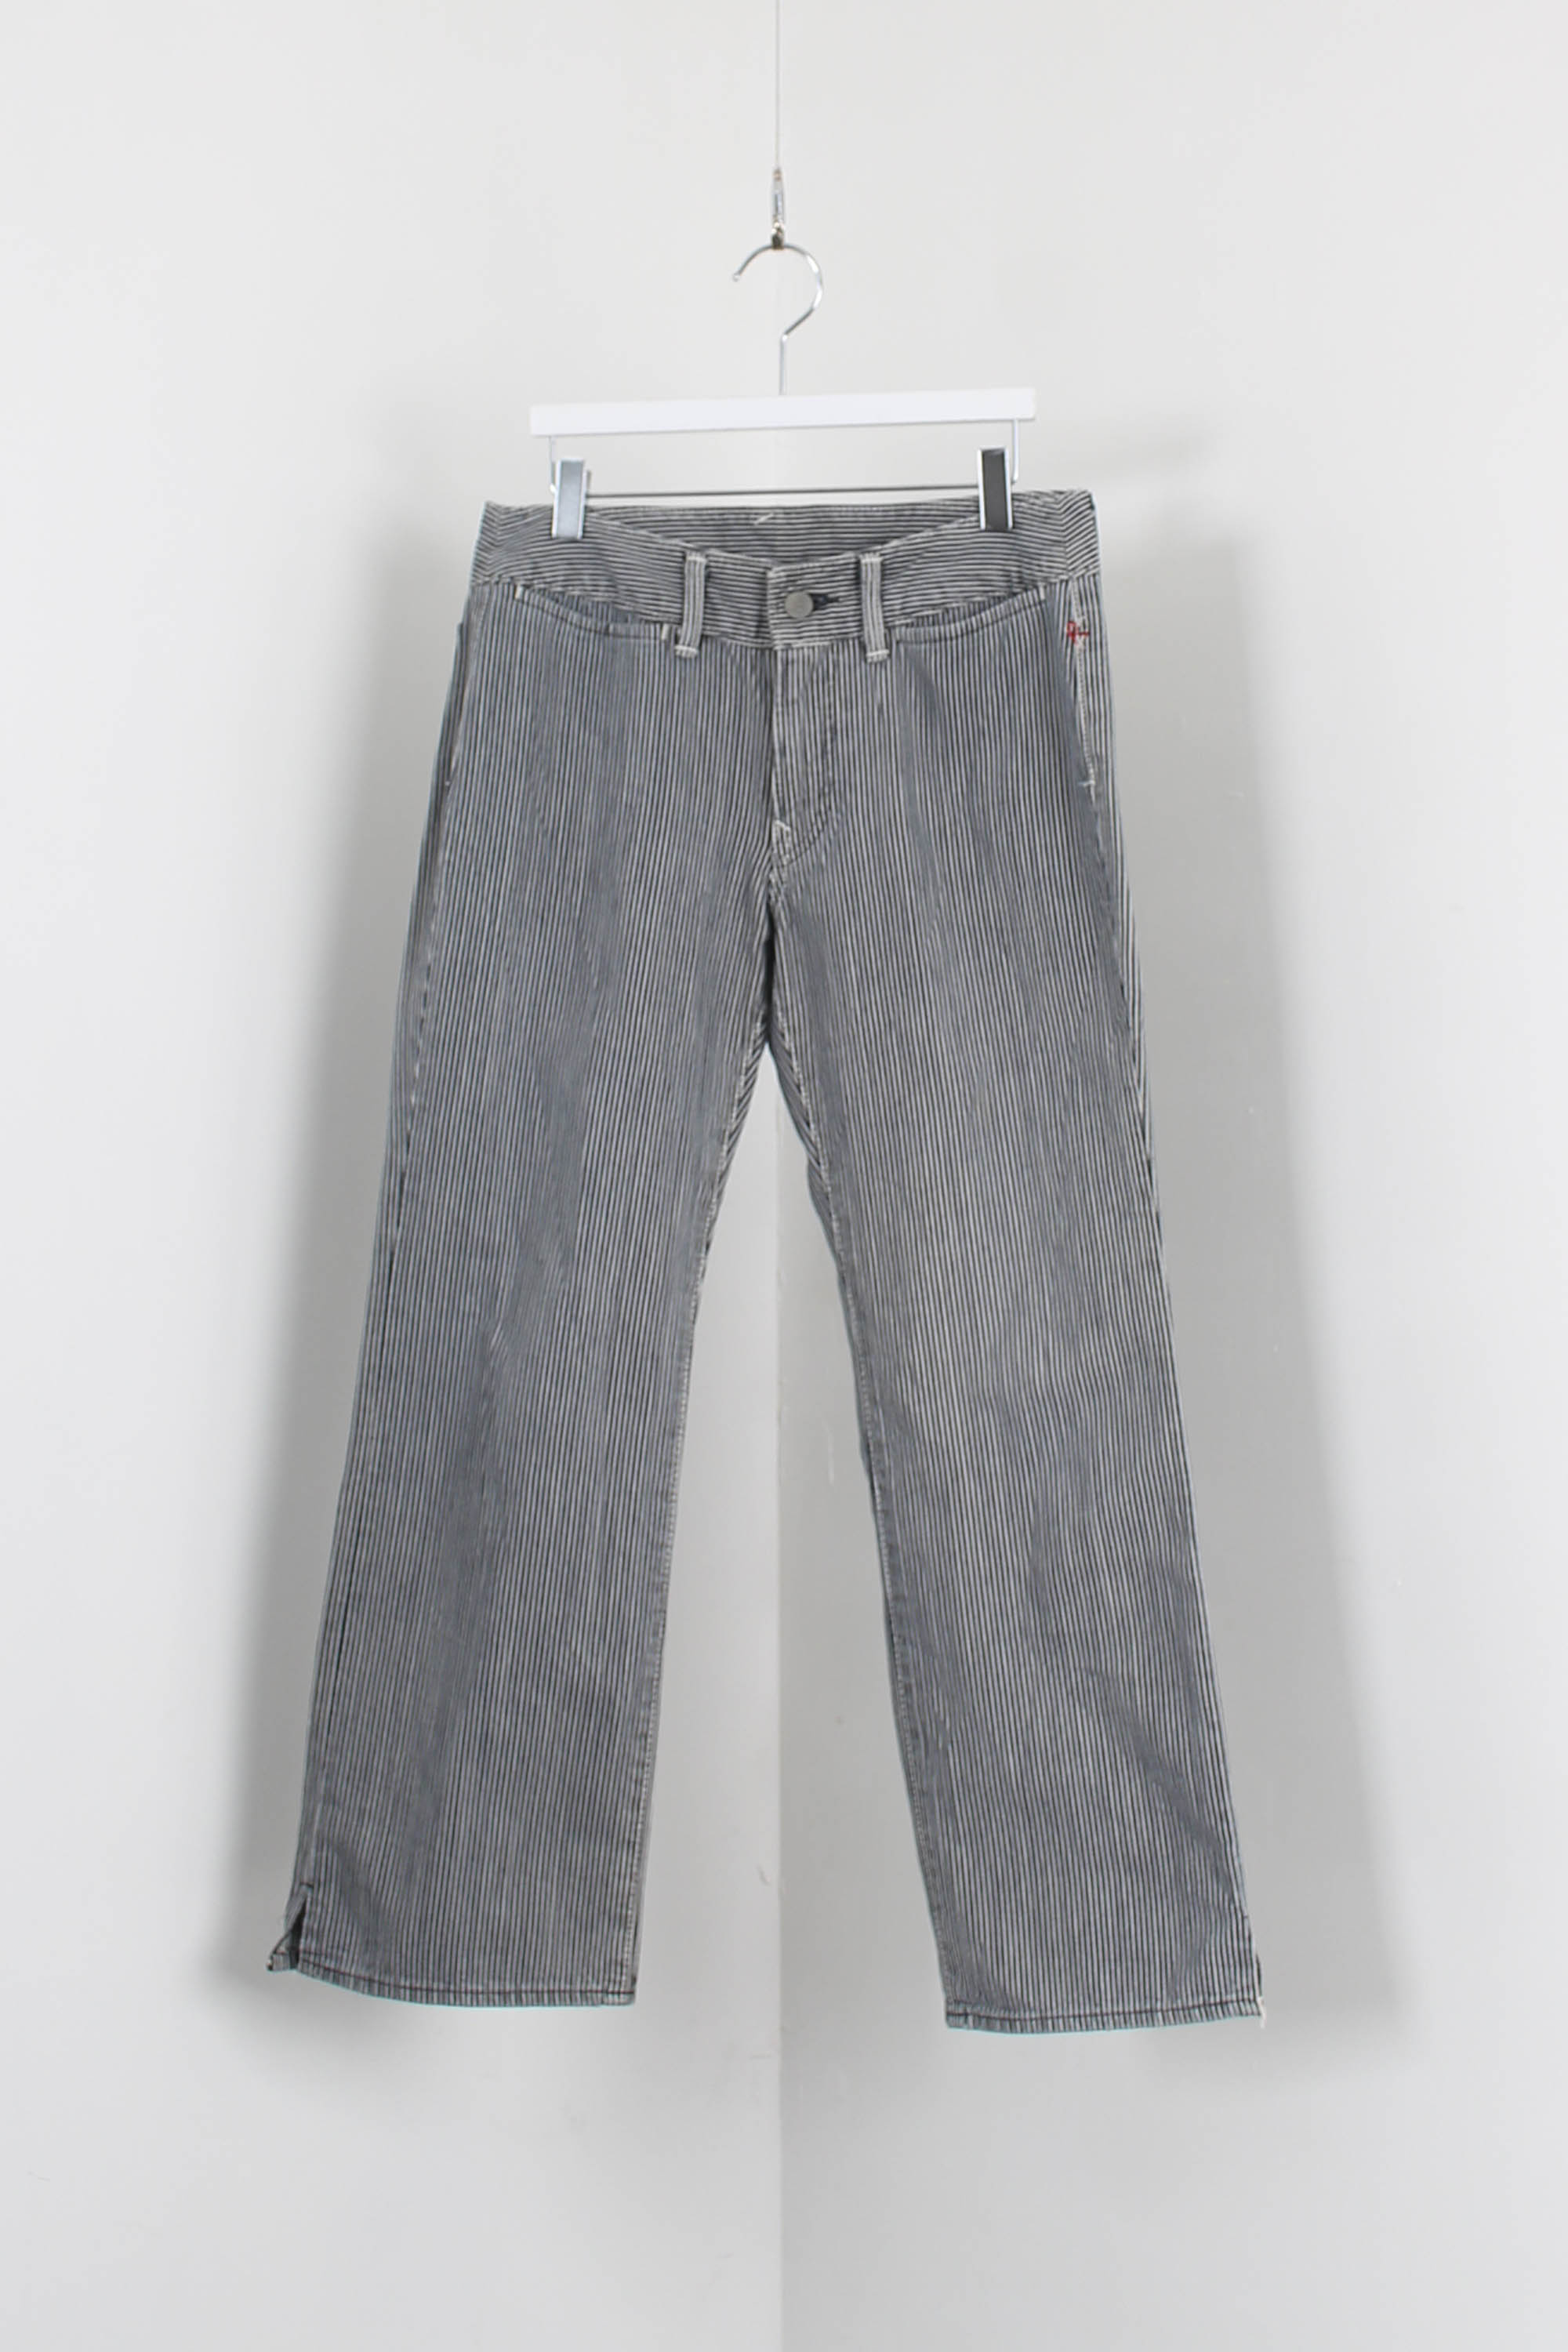 45R hickory pants